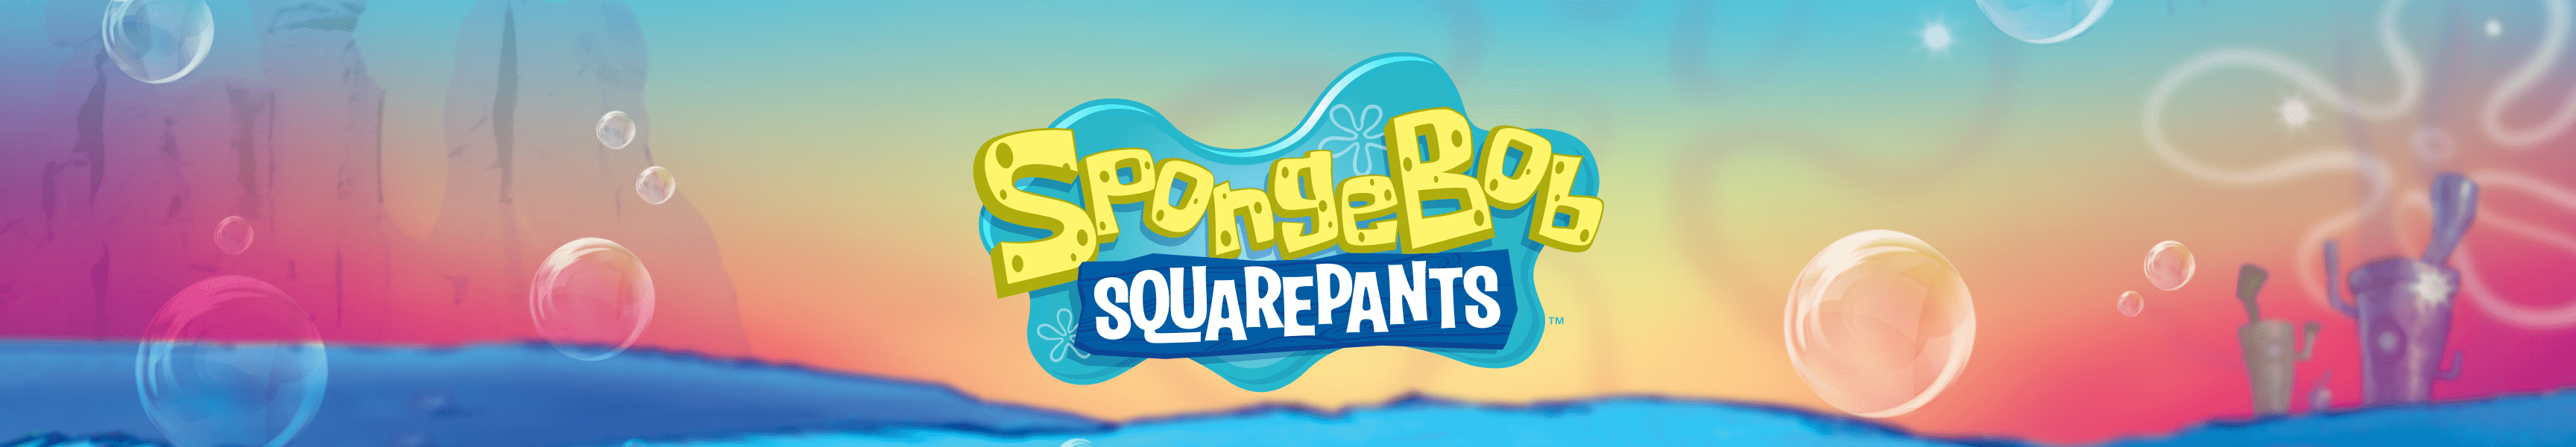 SpongeBob SquarePants Halloween